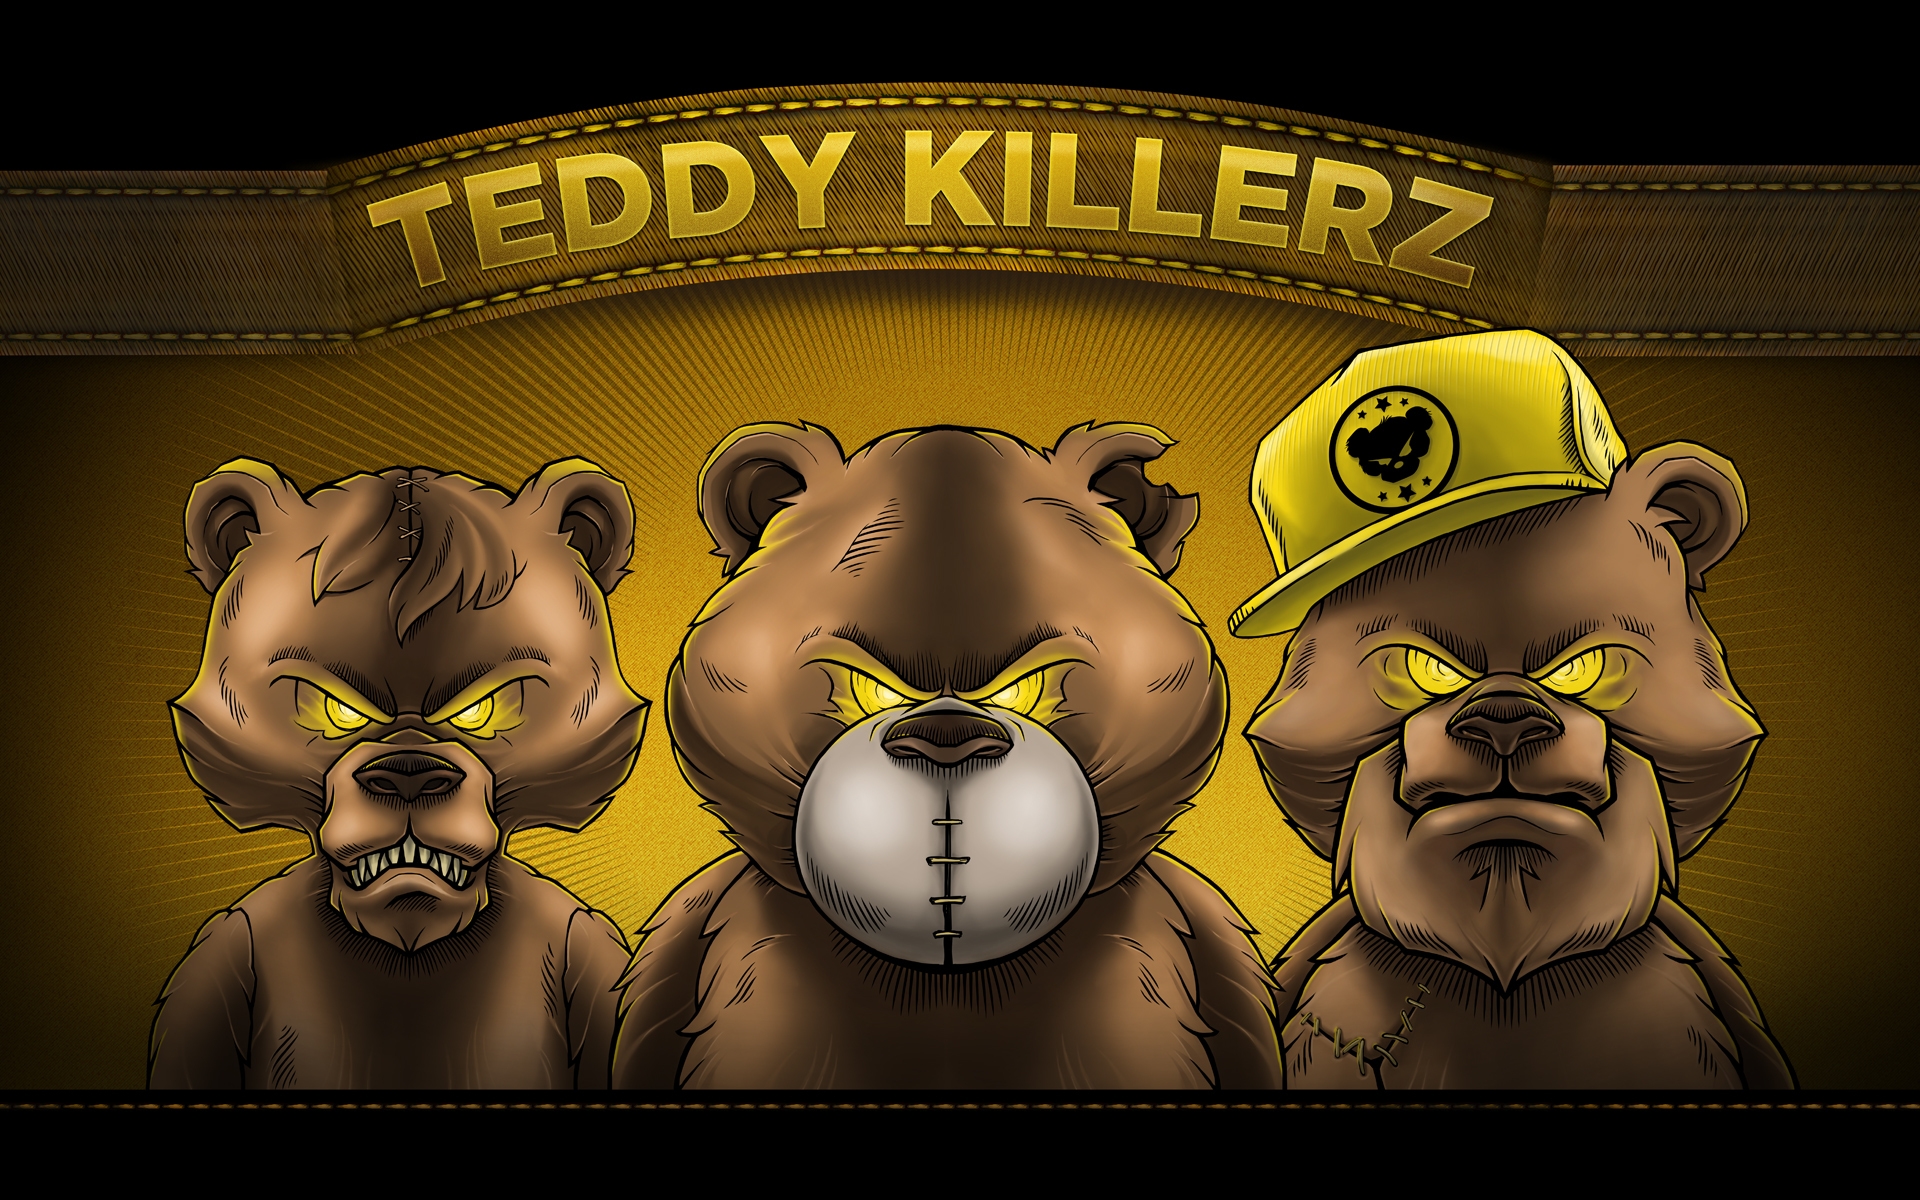 Teddy Killerz Poster for 1920 x 1200 widescreen resolution